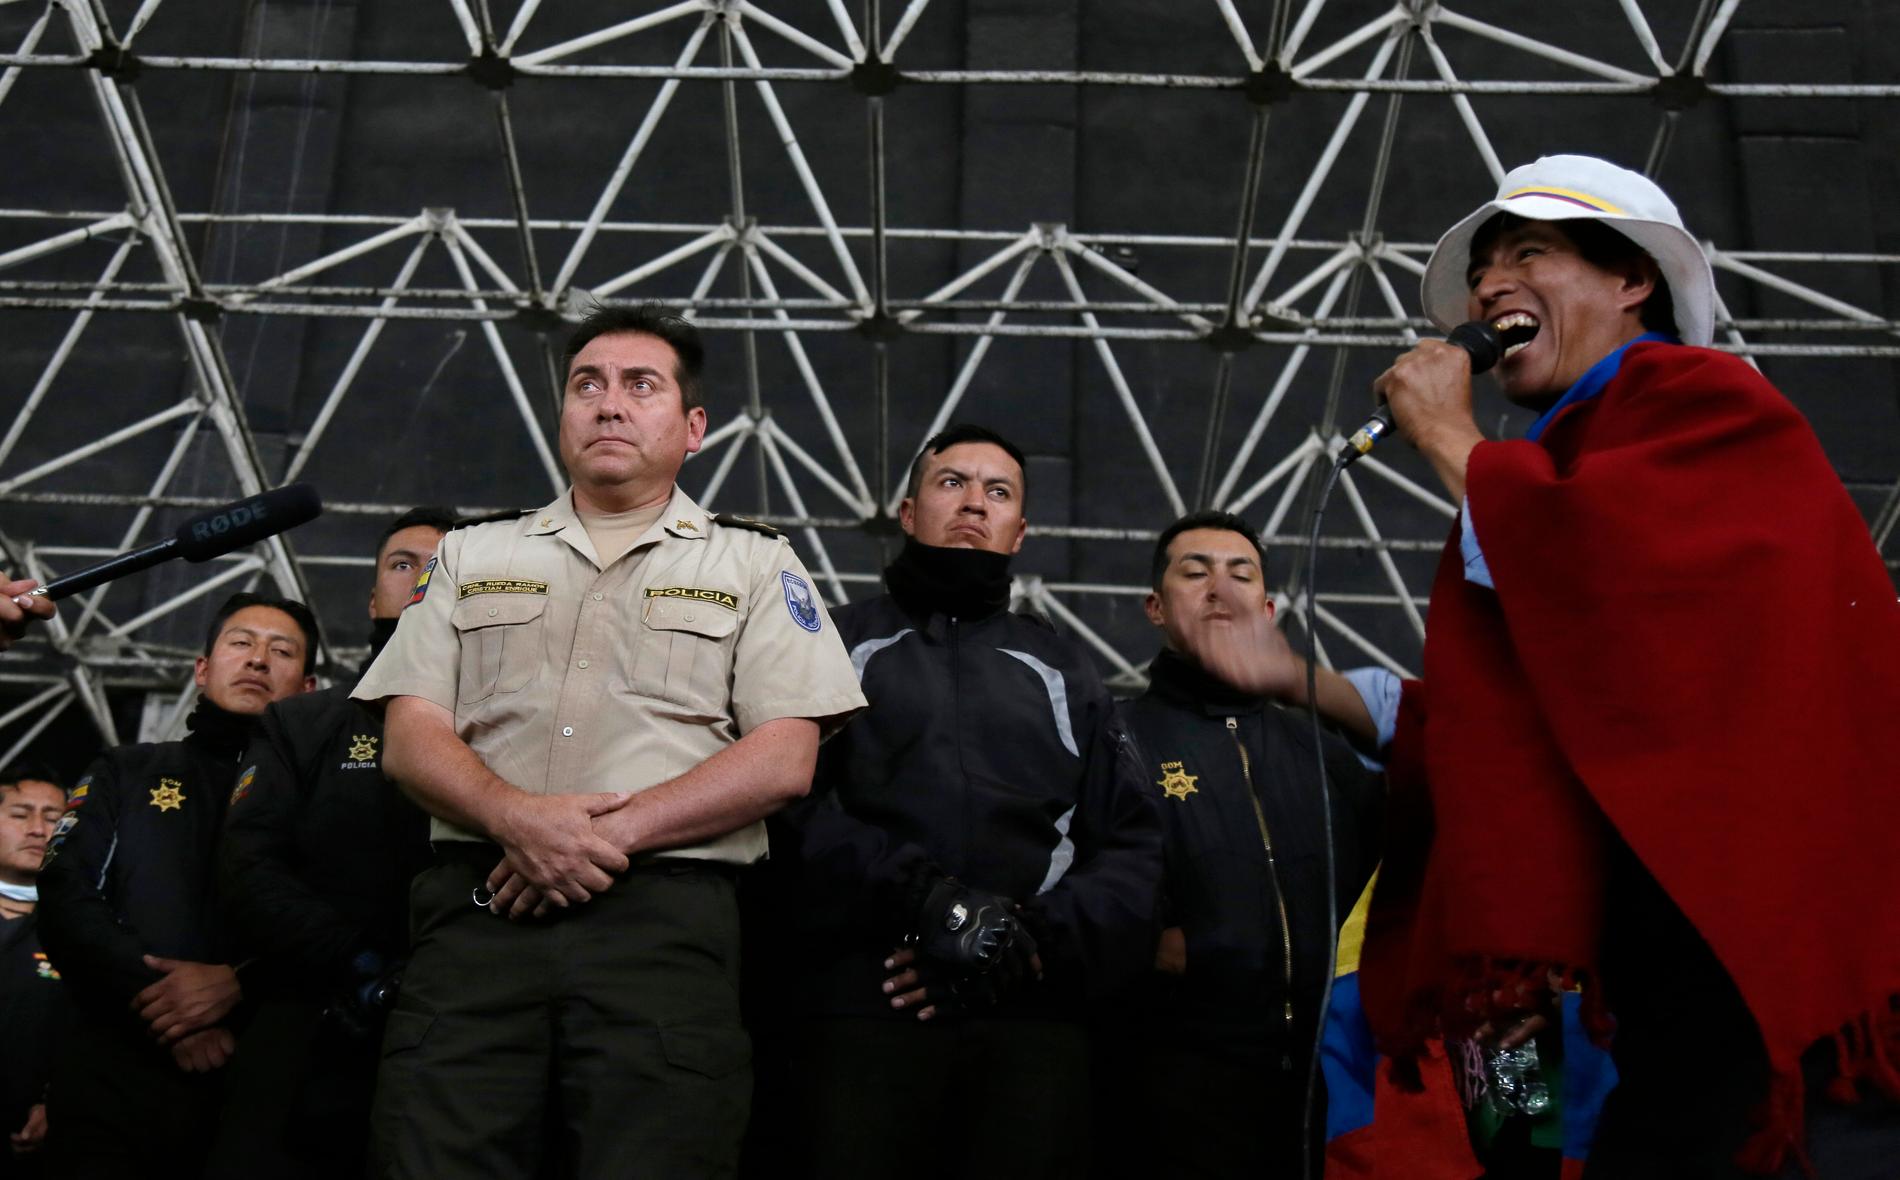 Åtta poliser hålls som gisslan av en grupp demonstranter i Ecuador.